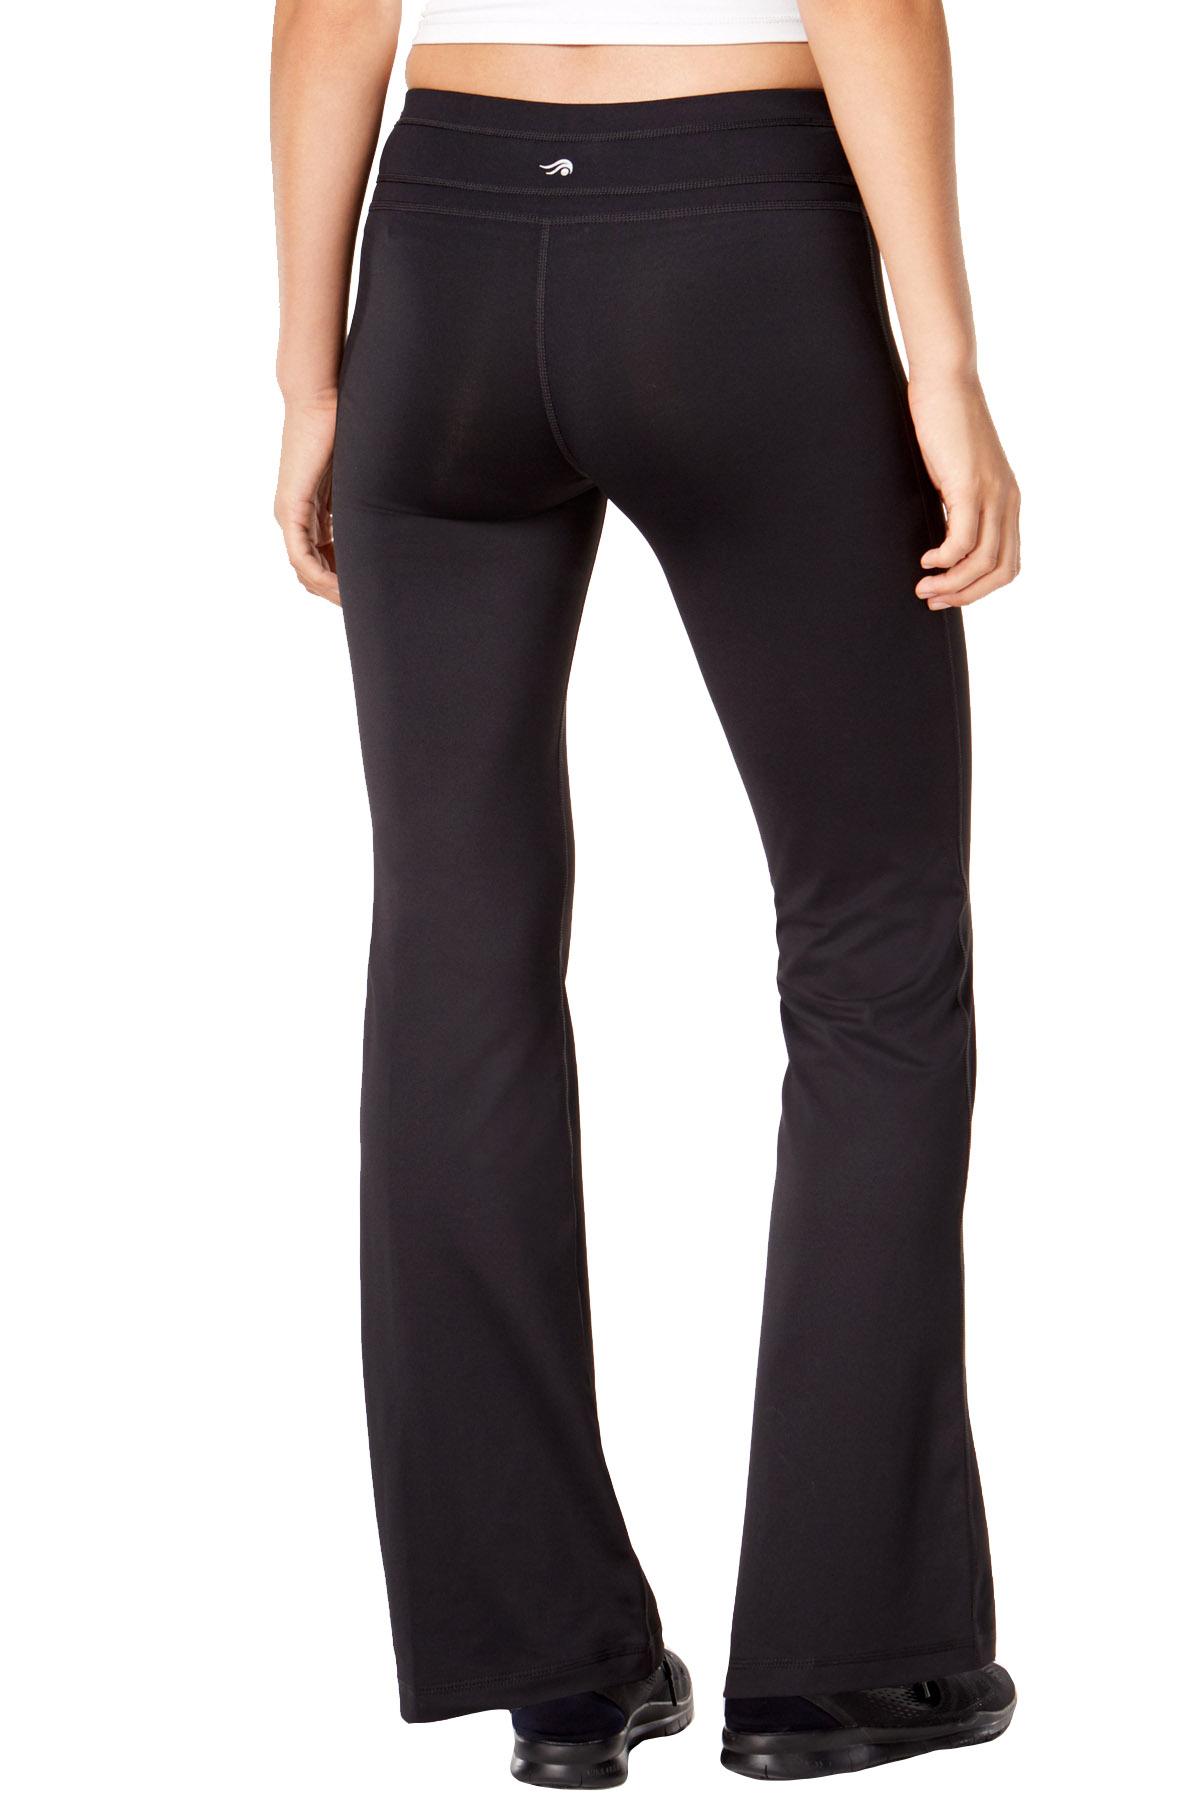 Betabrand Boot-Cut Classic Dress Yoga Pants Size Large